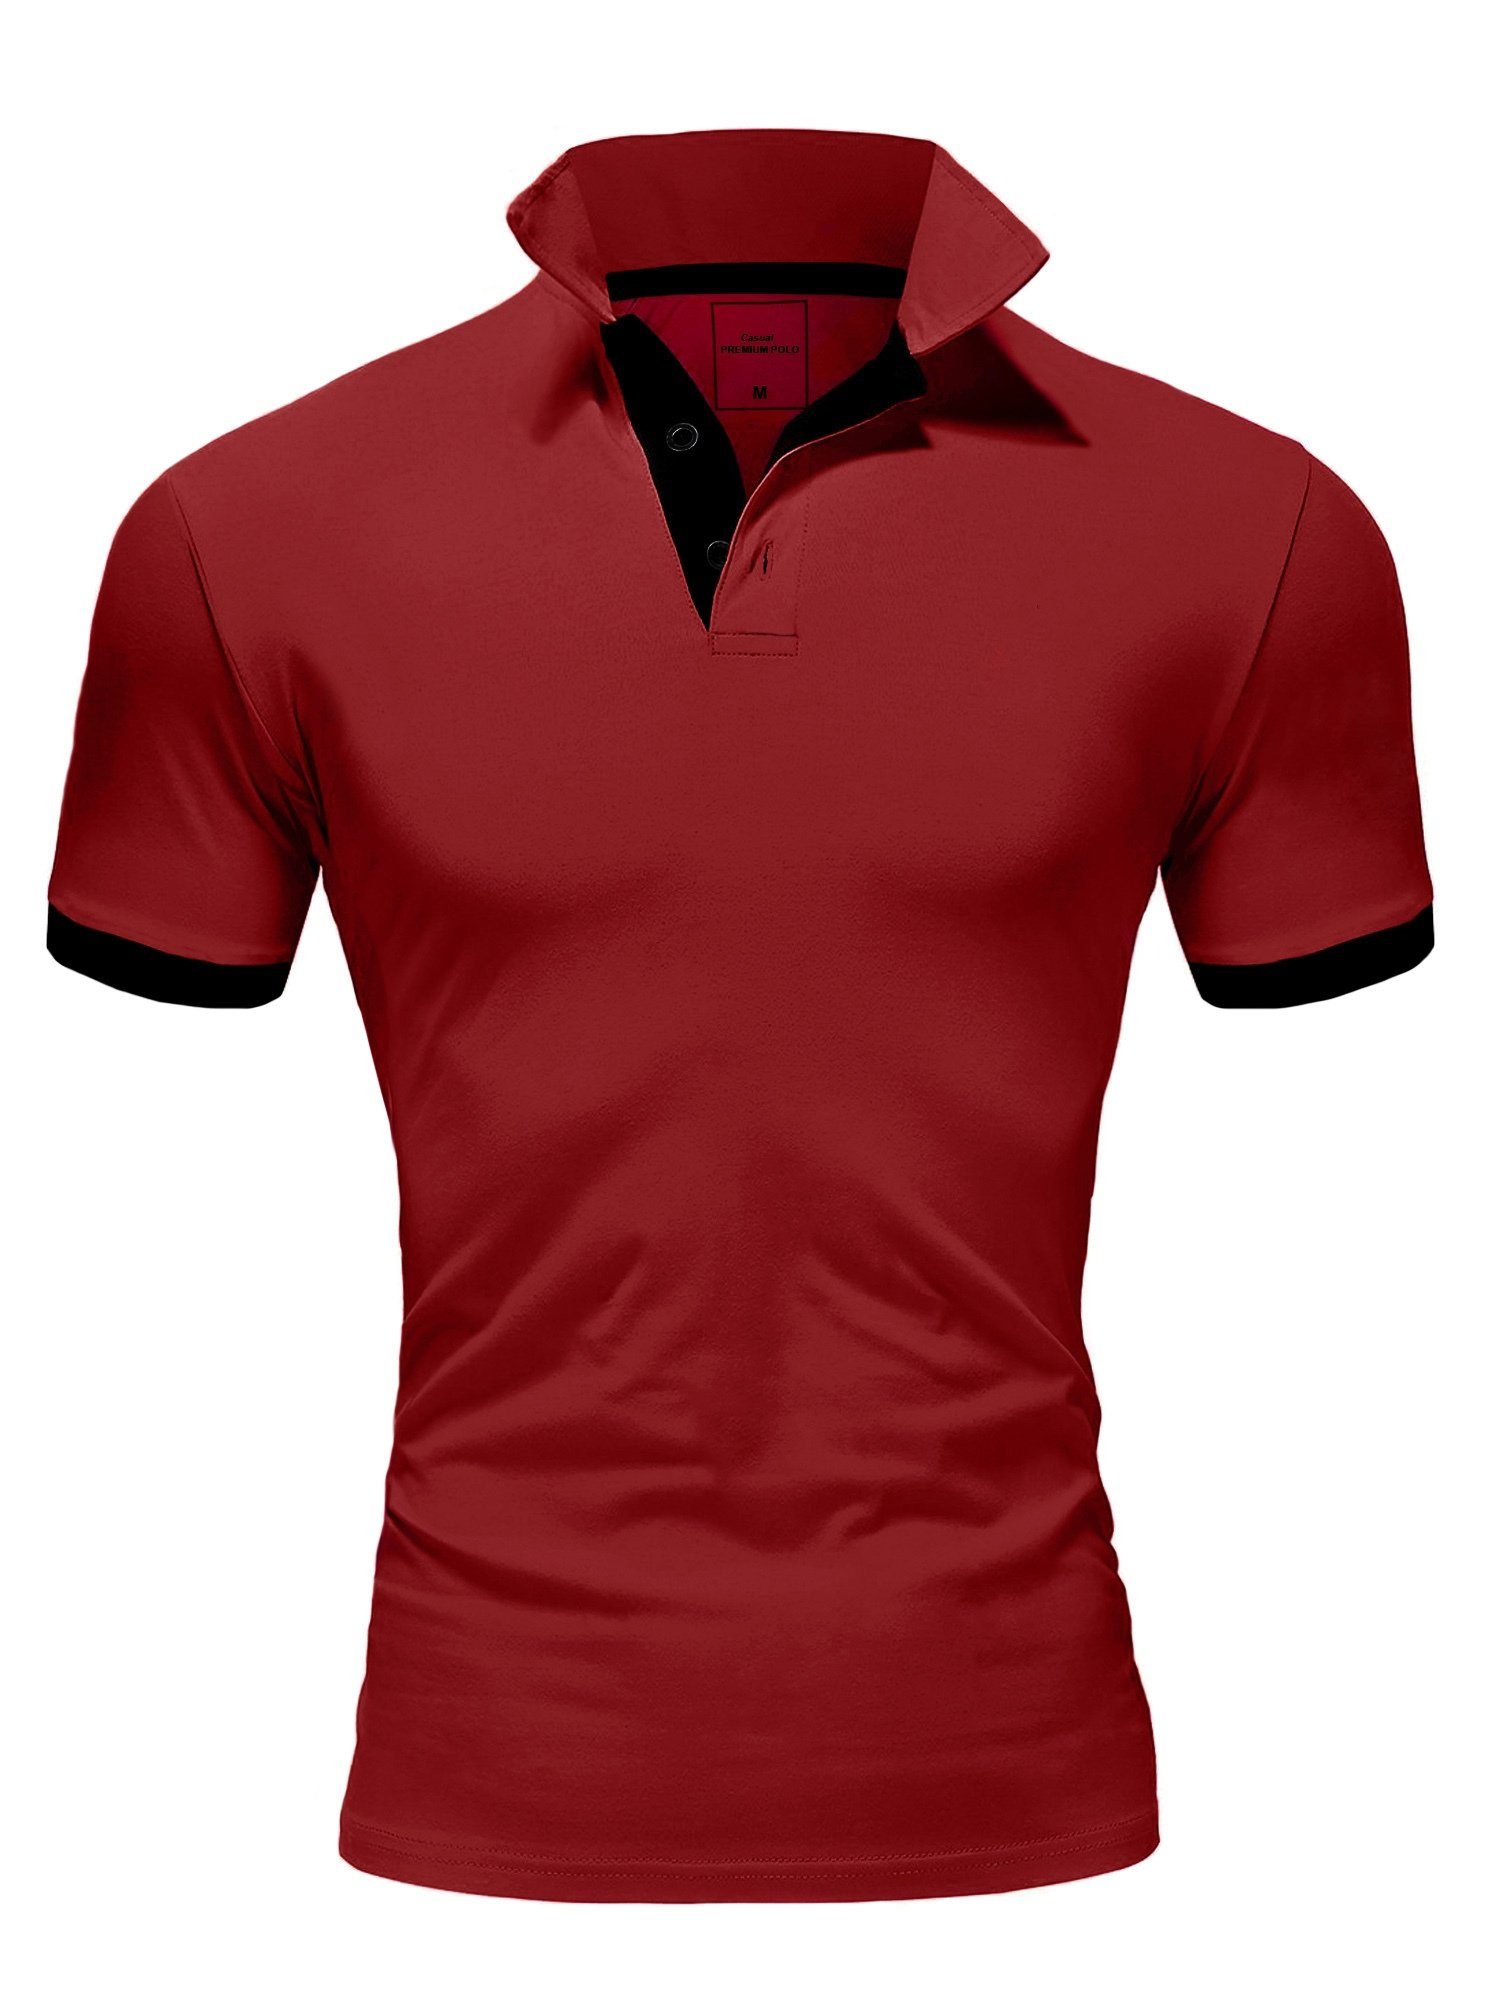 Poloshirt Shirt Herren Bordeaux/Schwarz in Piqué Akzenten, kontrastierenden REPUBLIX Qualität RONALD mit